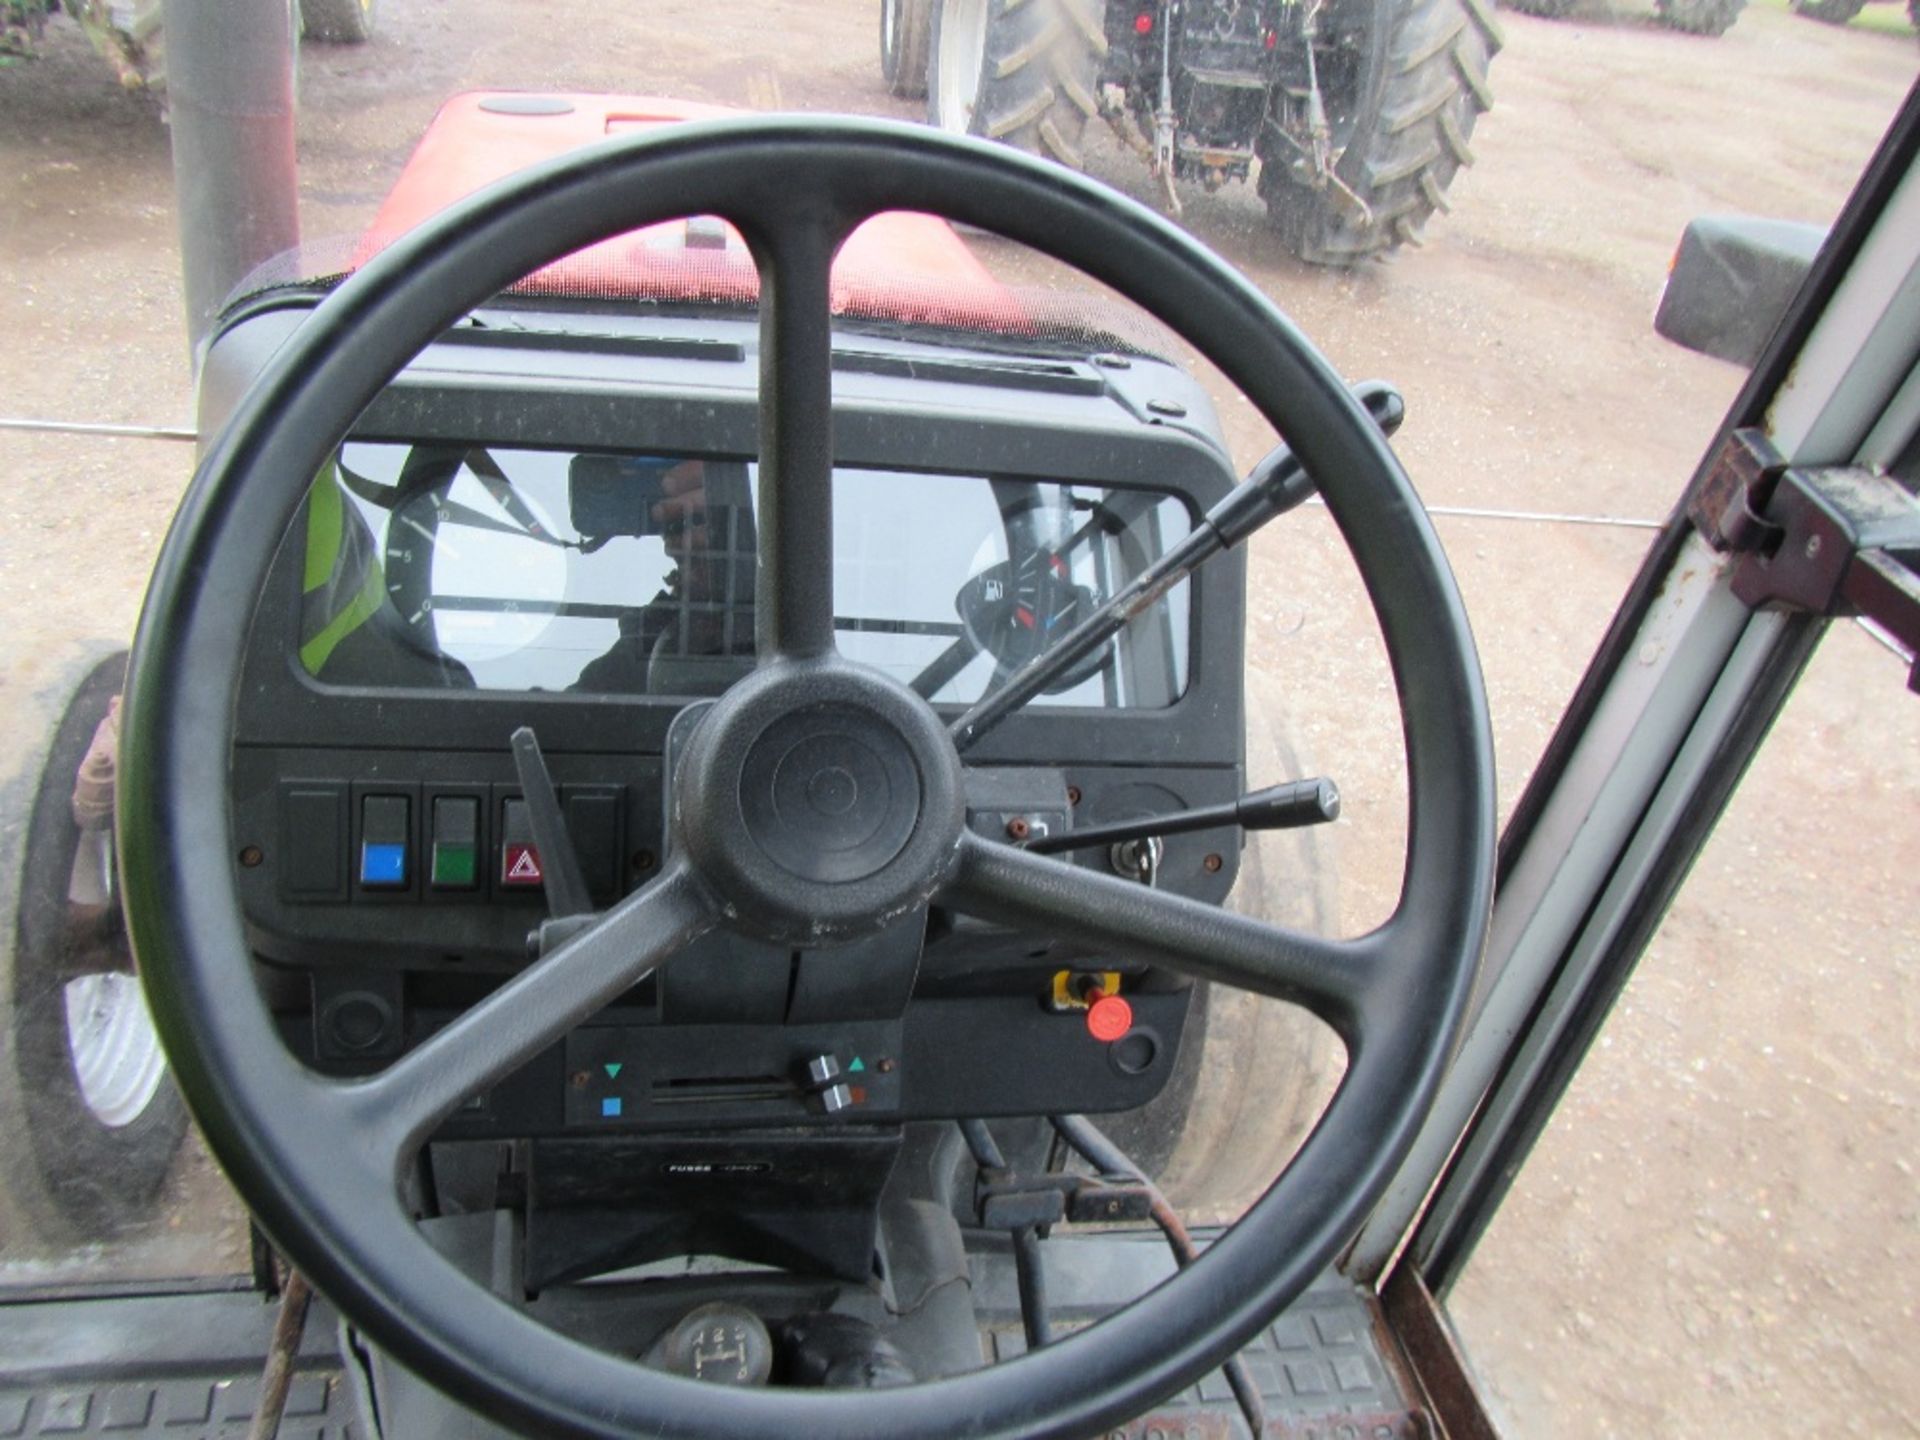 Massey Ferguson 342 8 Speed Tractor with PAS, Lo Profile Cab. Ser. No. B42076 - Image 15 of 17